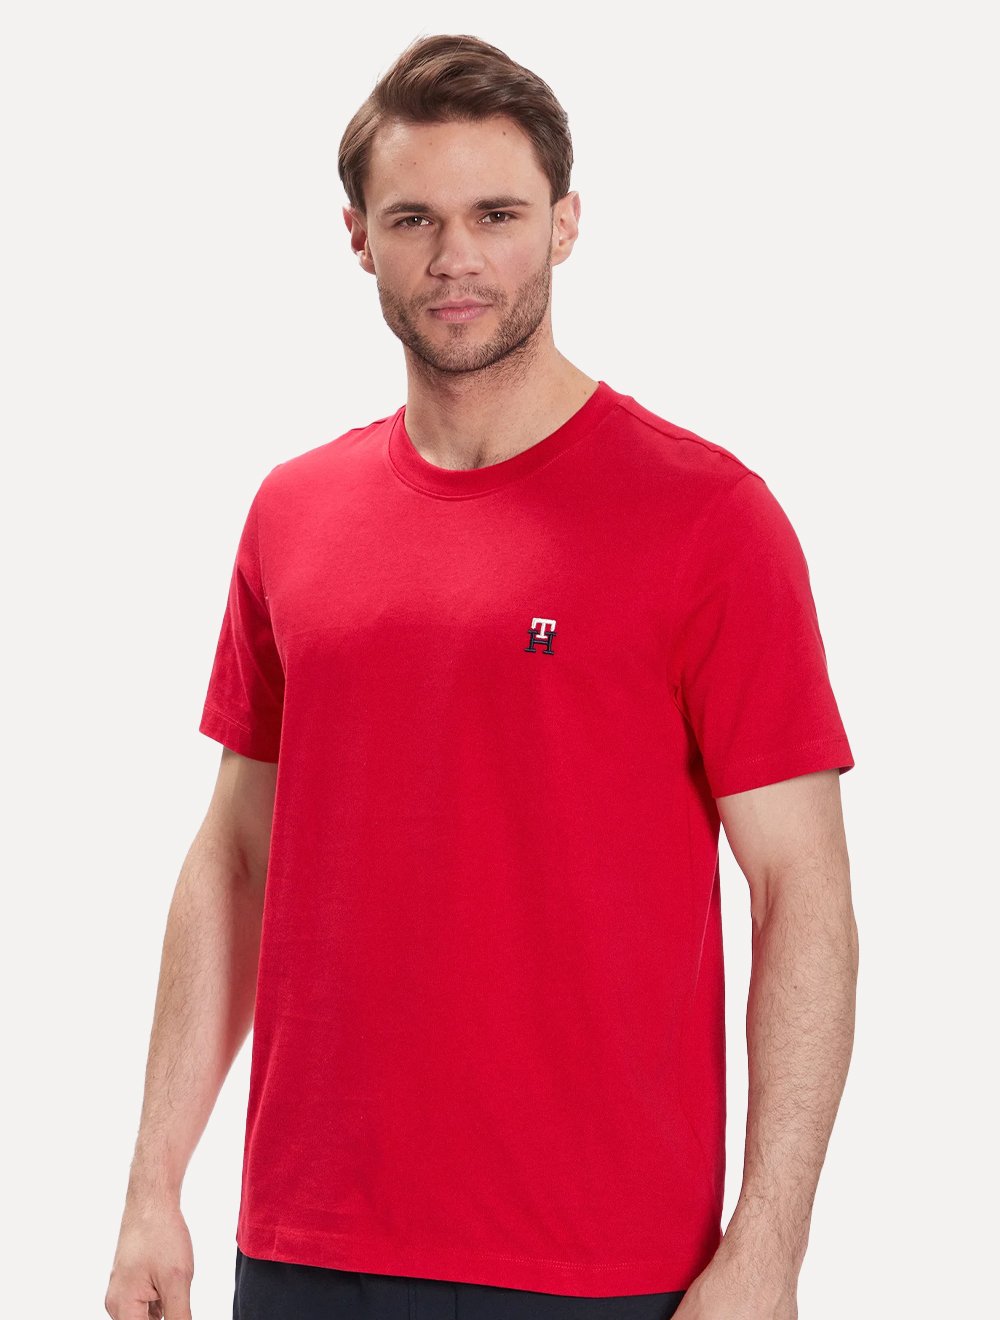 Camiseta Tommy Hilfiger Masculina Small Monogram Vermelha